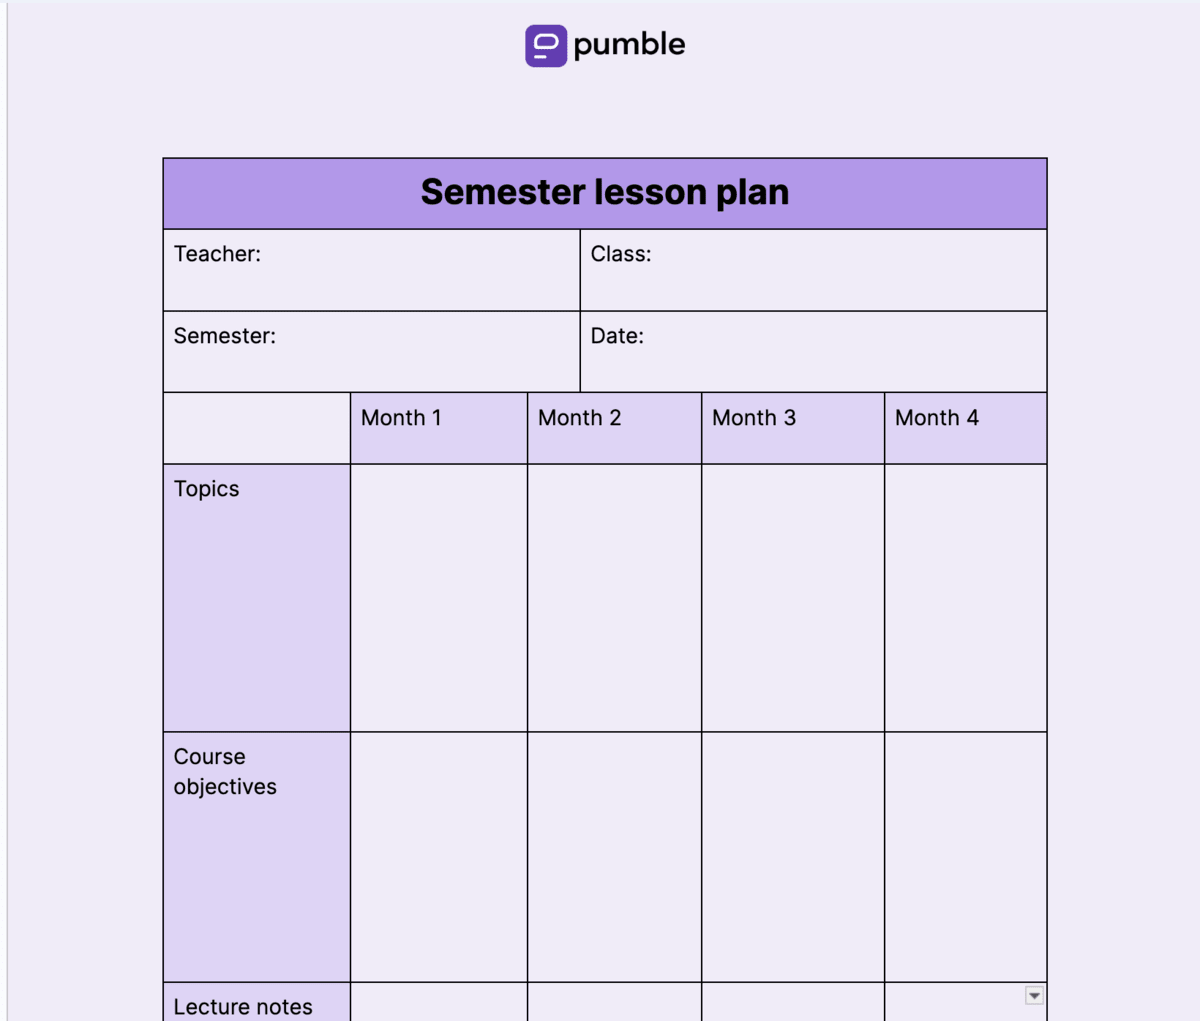 Semester lesson plan template